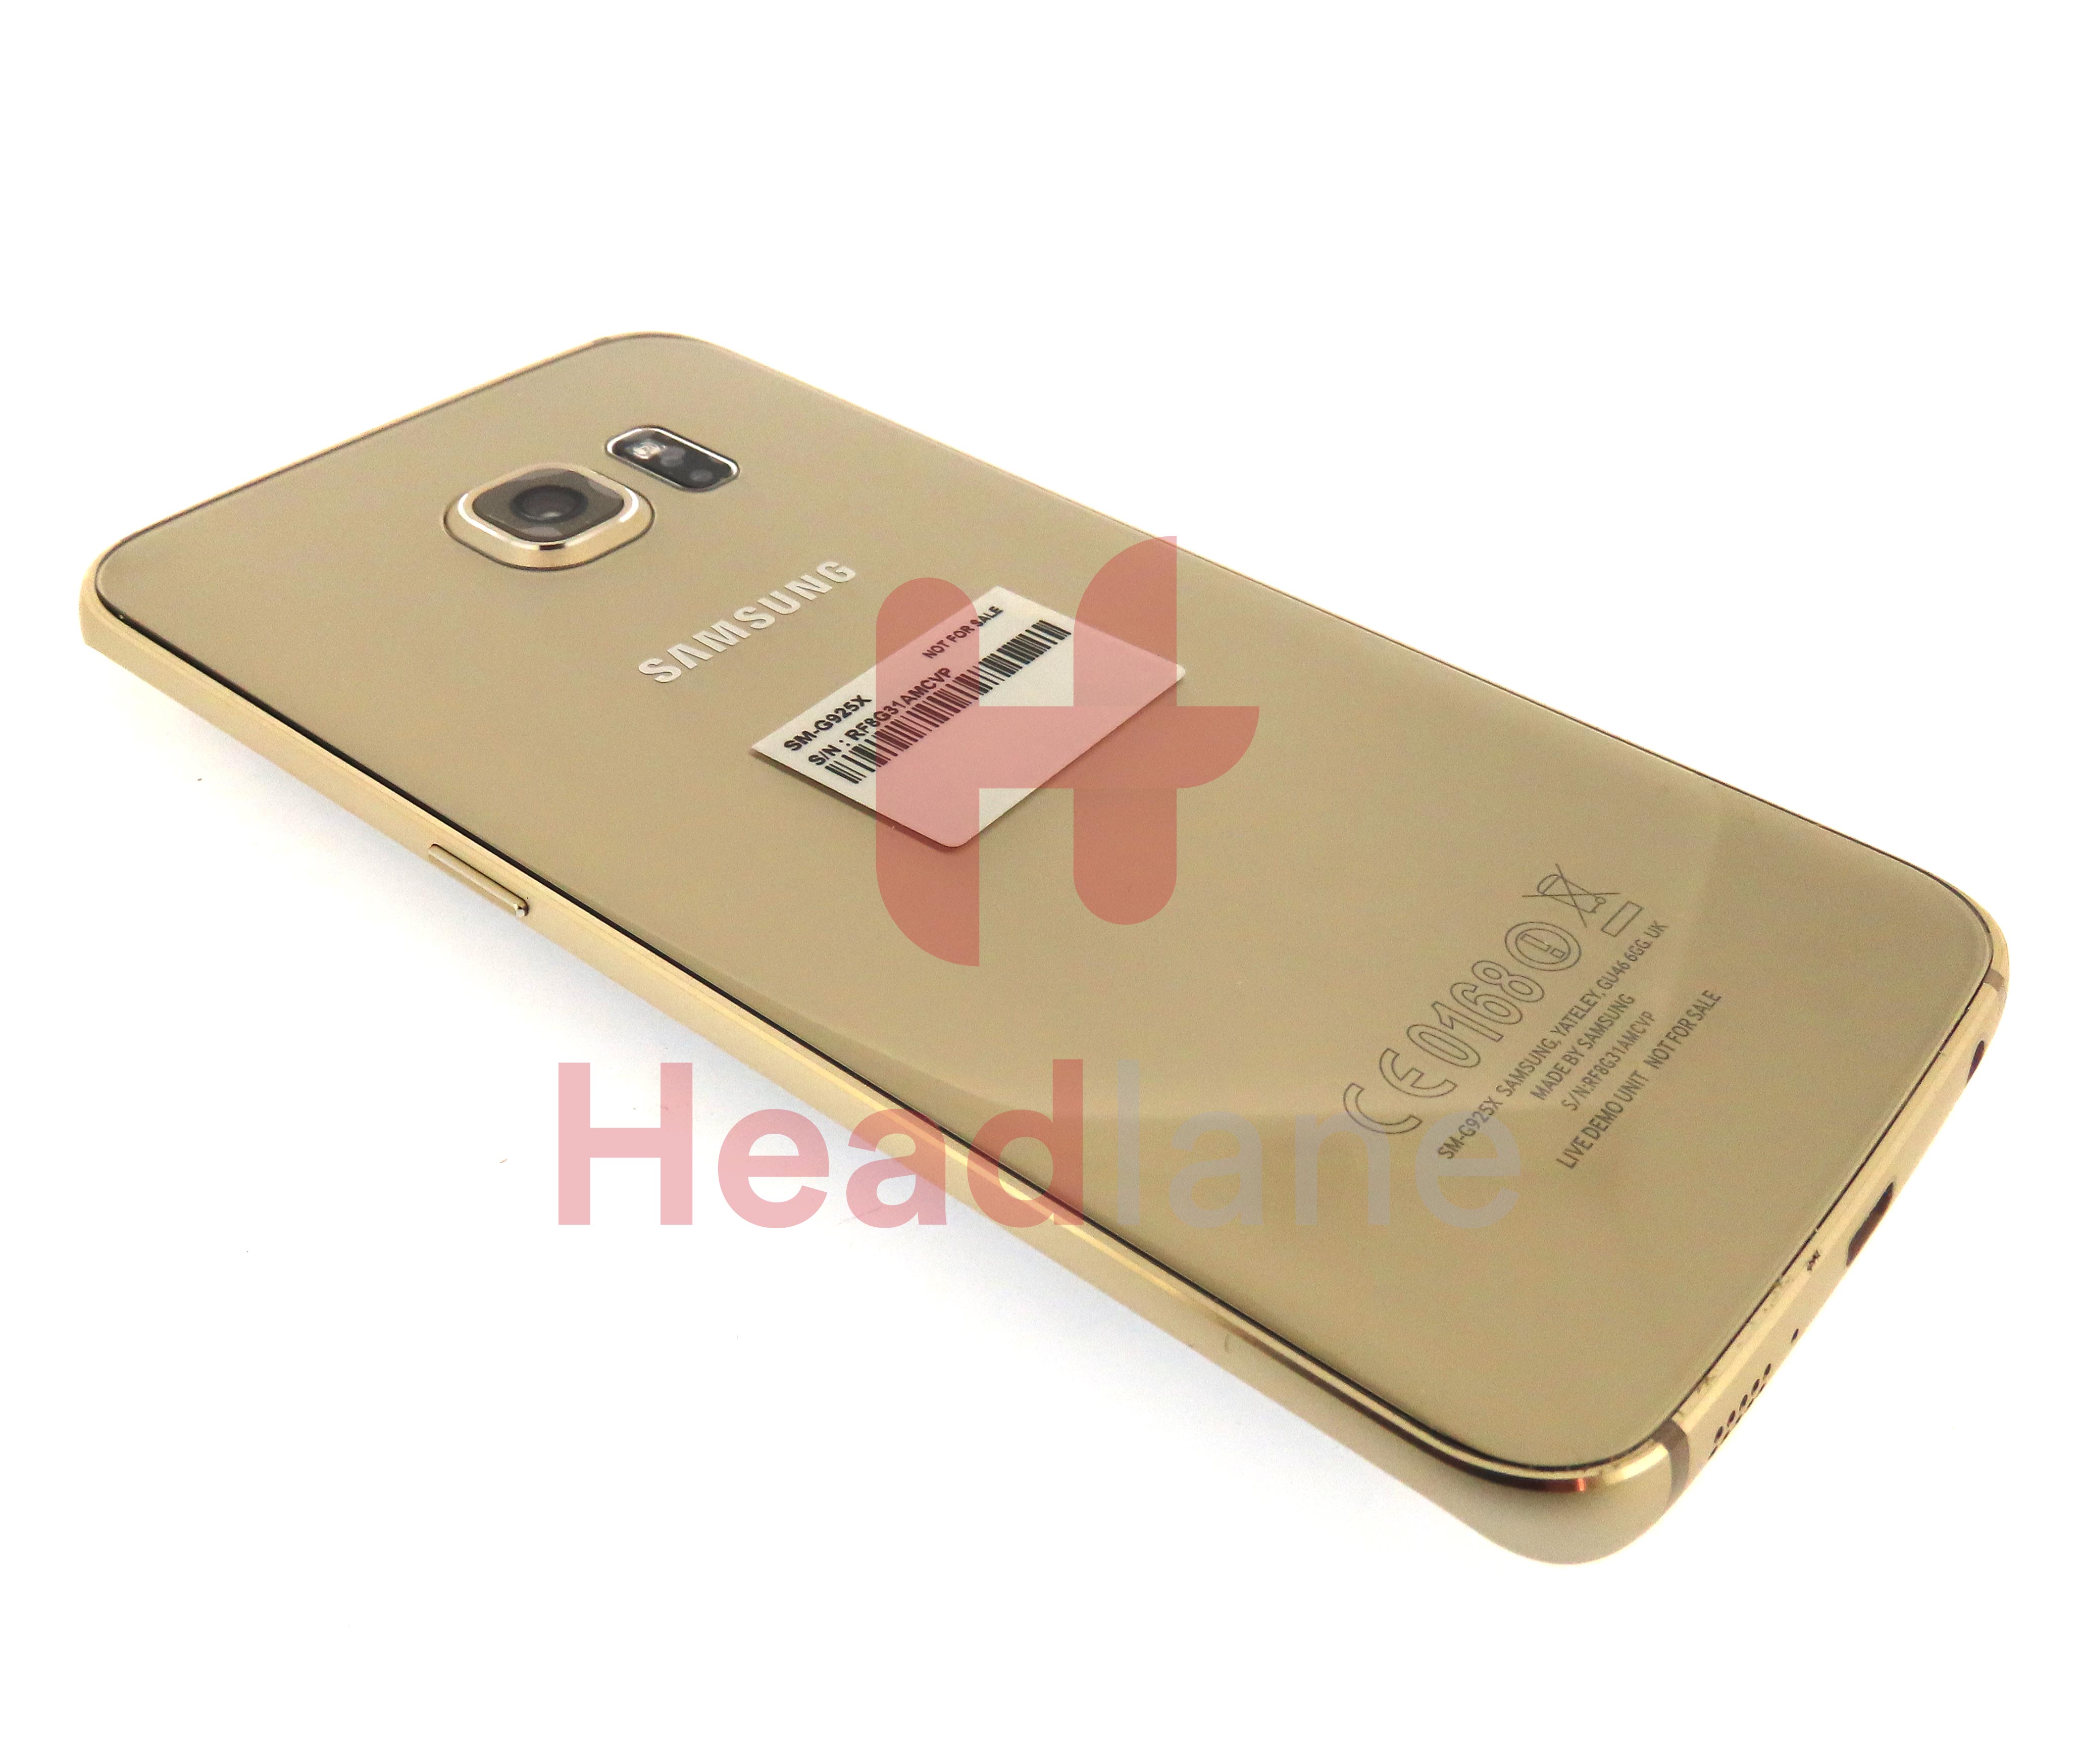 Samsung SM-G925 Galaxy S6 Edge Demo Phone - Gold